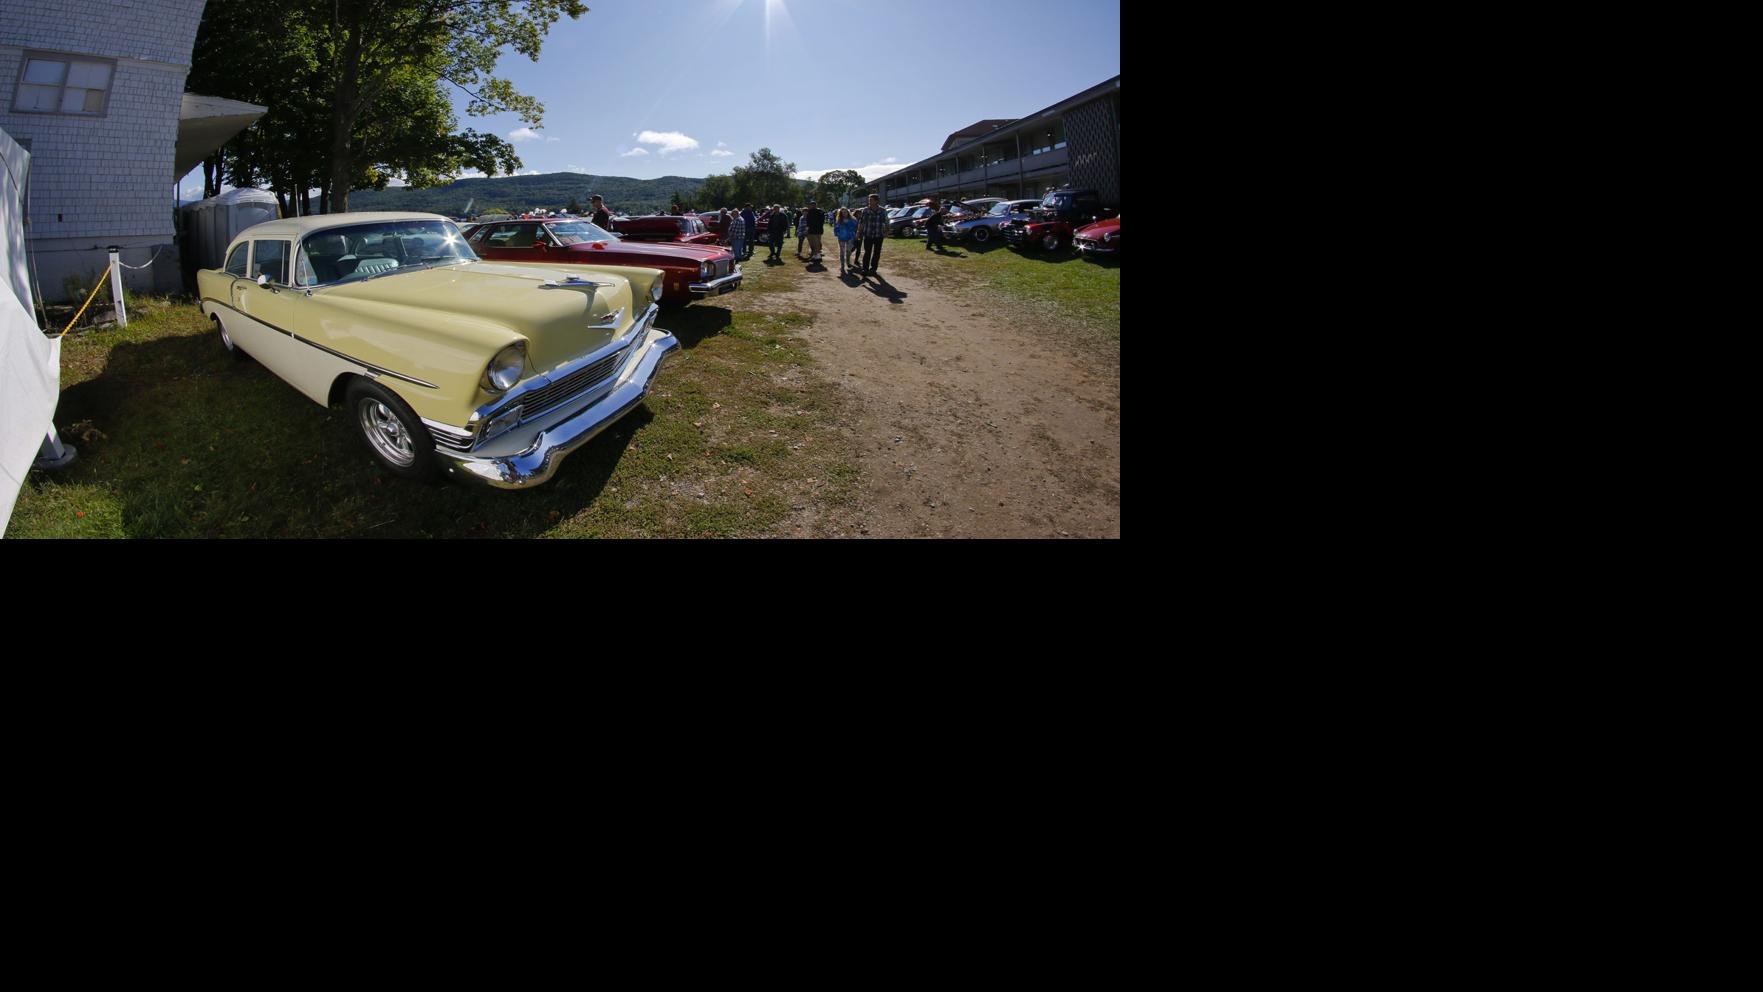 PHOTO GALLERY Adirondack Nationals Car Show Photo Galleries